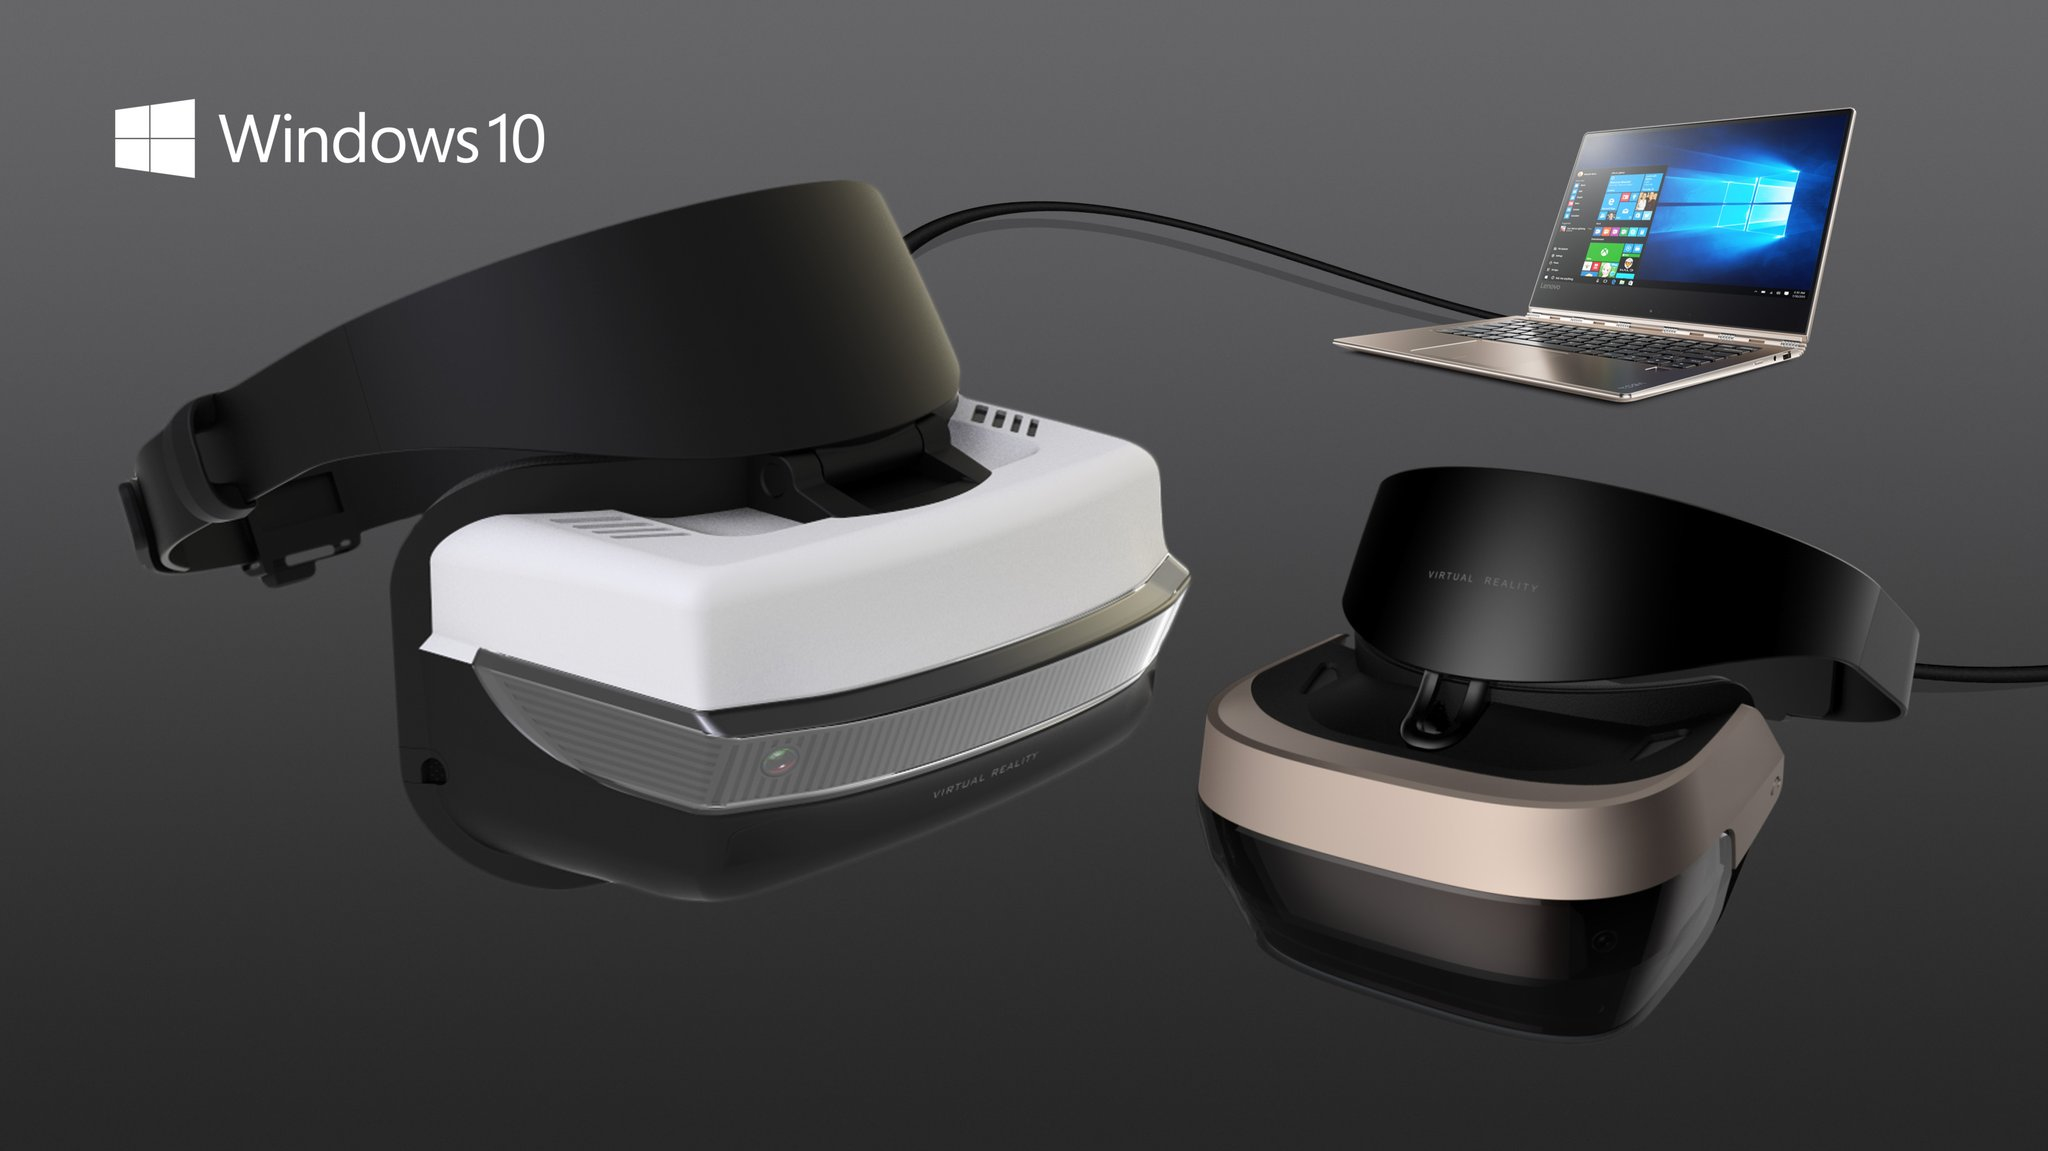 Windows 10 test build reveals PC specs for Windows 10 VR headsets